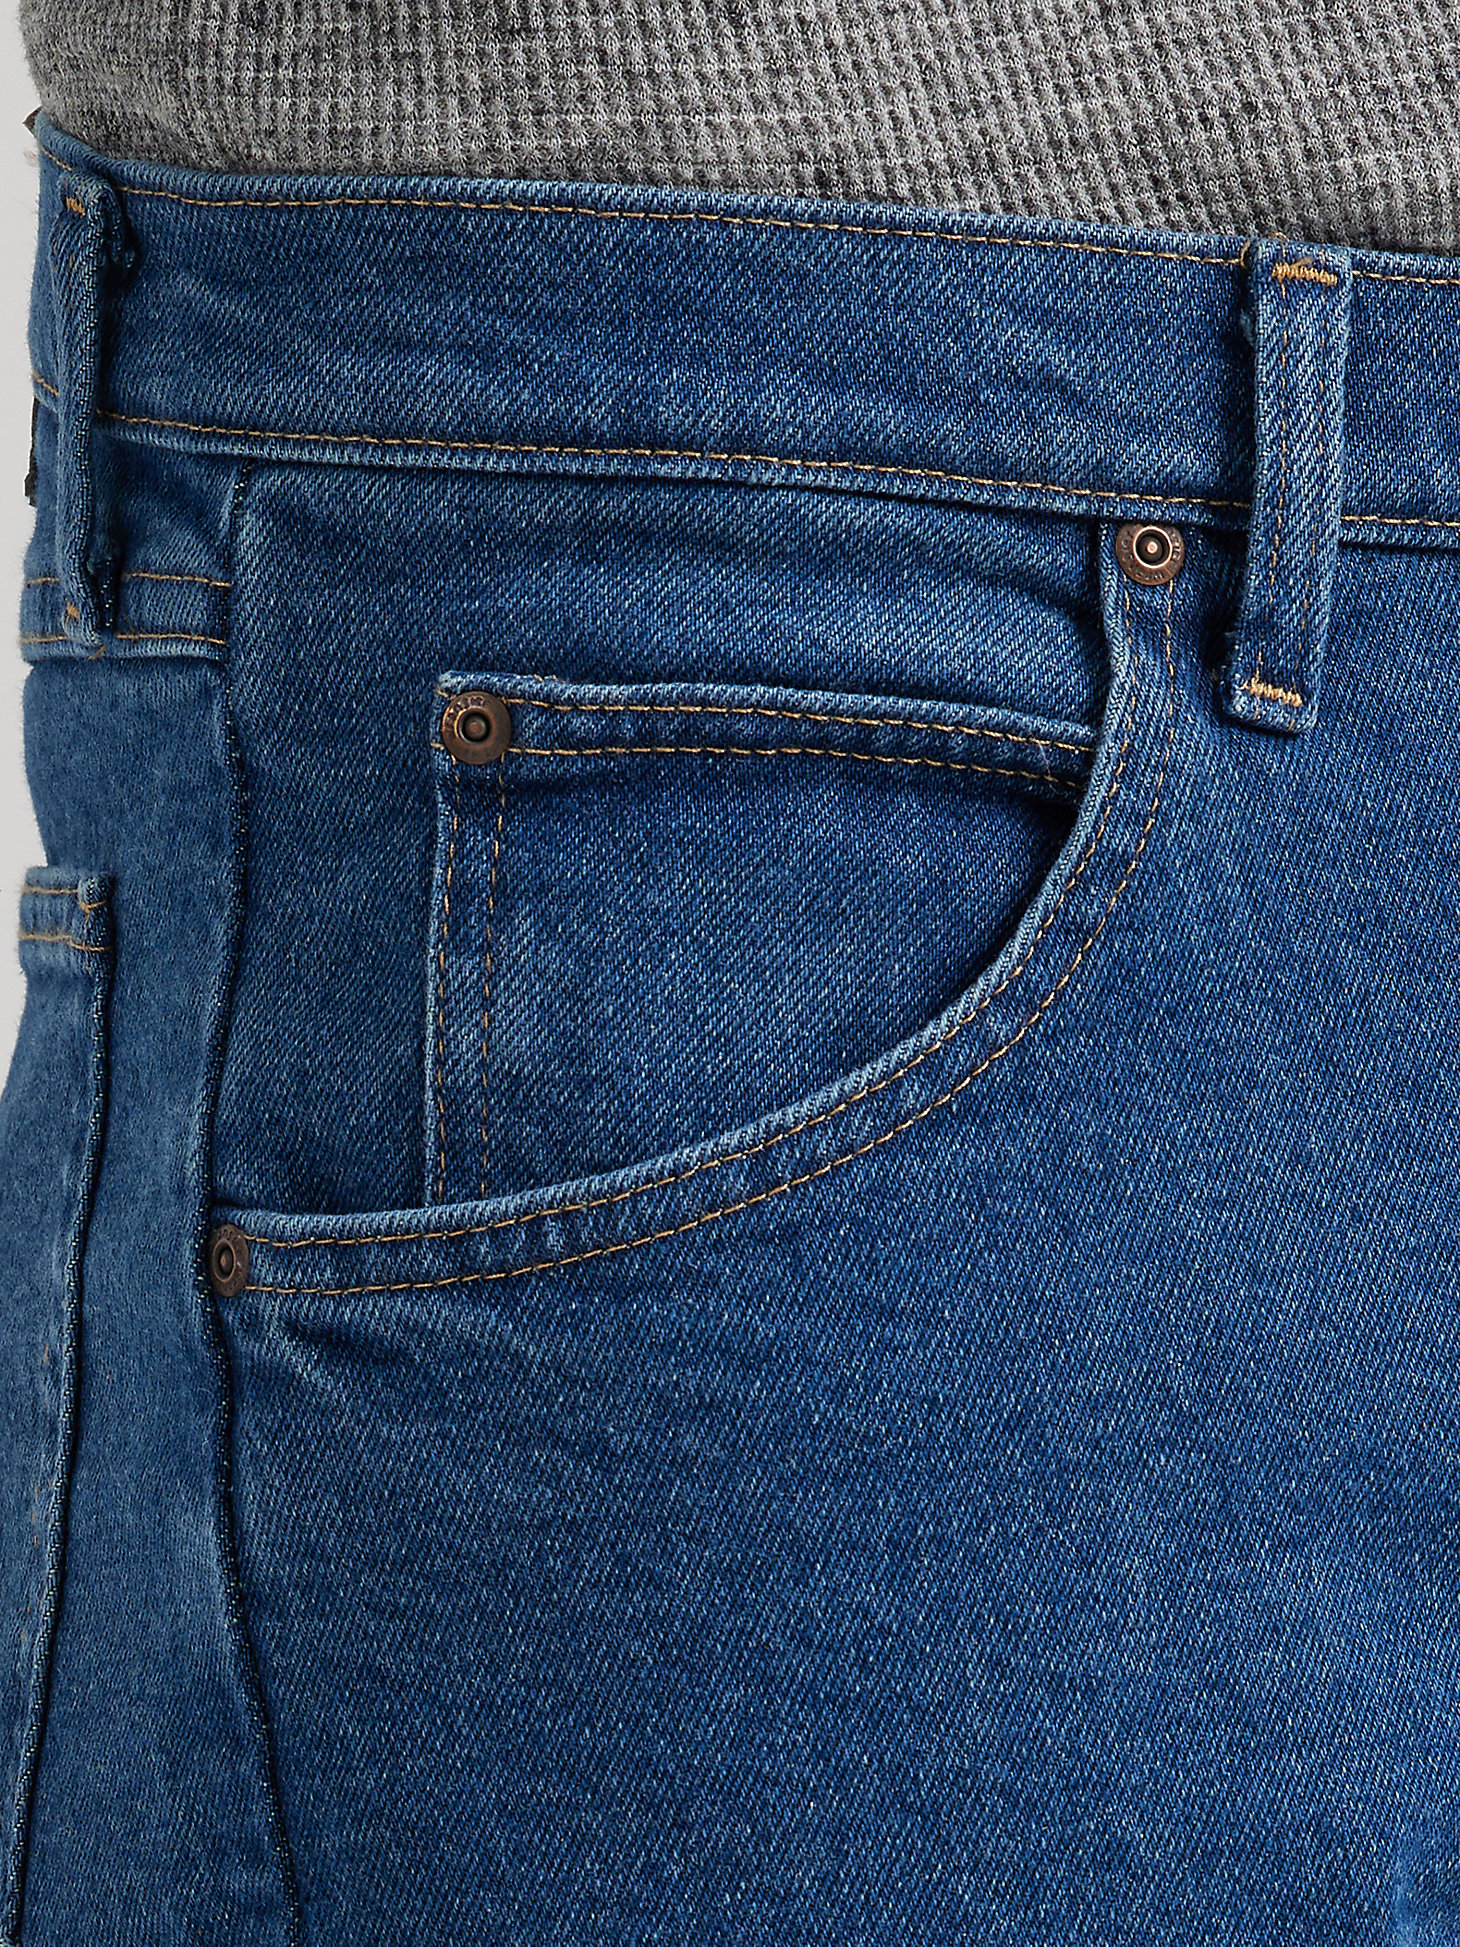 Wrangler® Five Star Premium Denim Flex for Comfort Relaxed Fit Jean in Stone alternative view 4